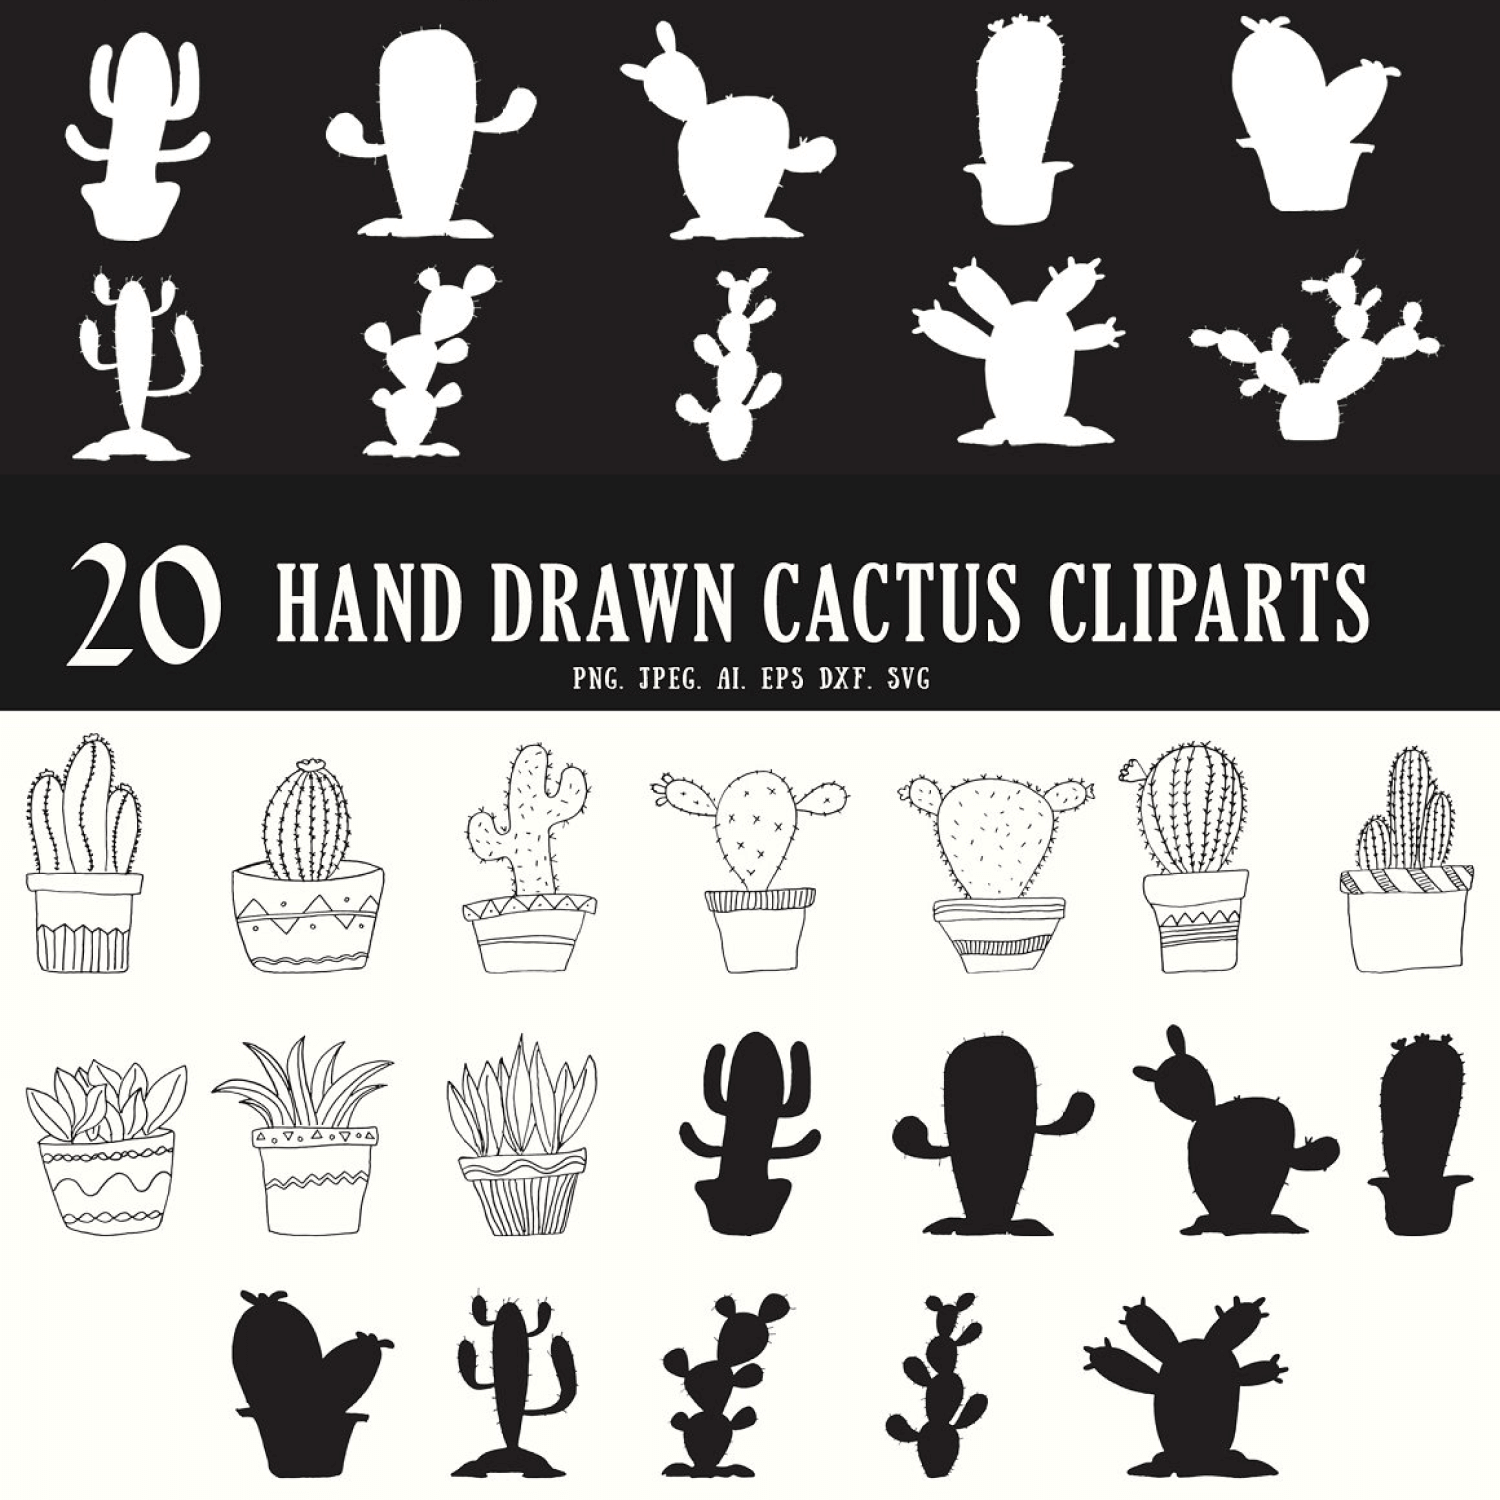 Cactus Cliparts PNG, JPEG, AI, EPS, DXF, SVG.